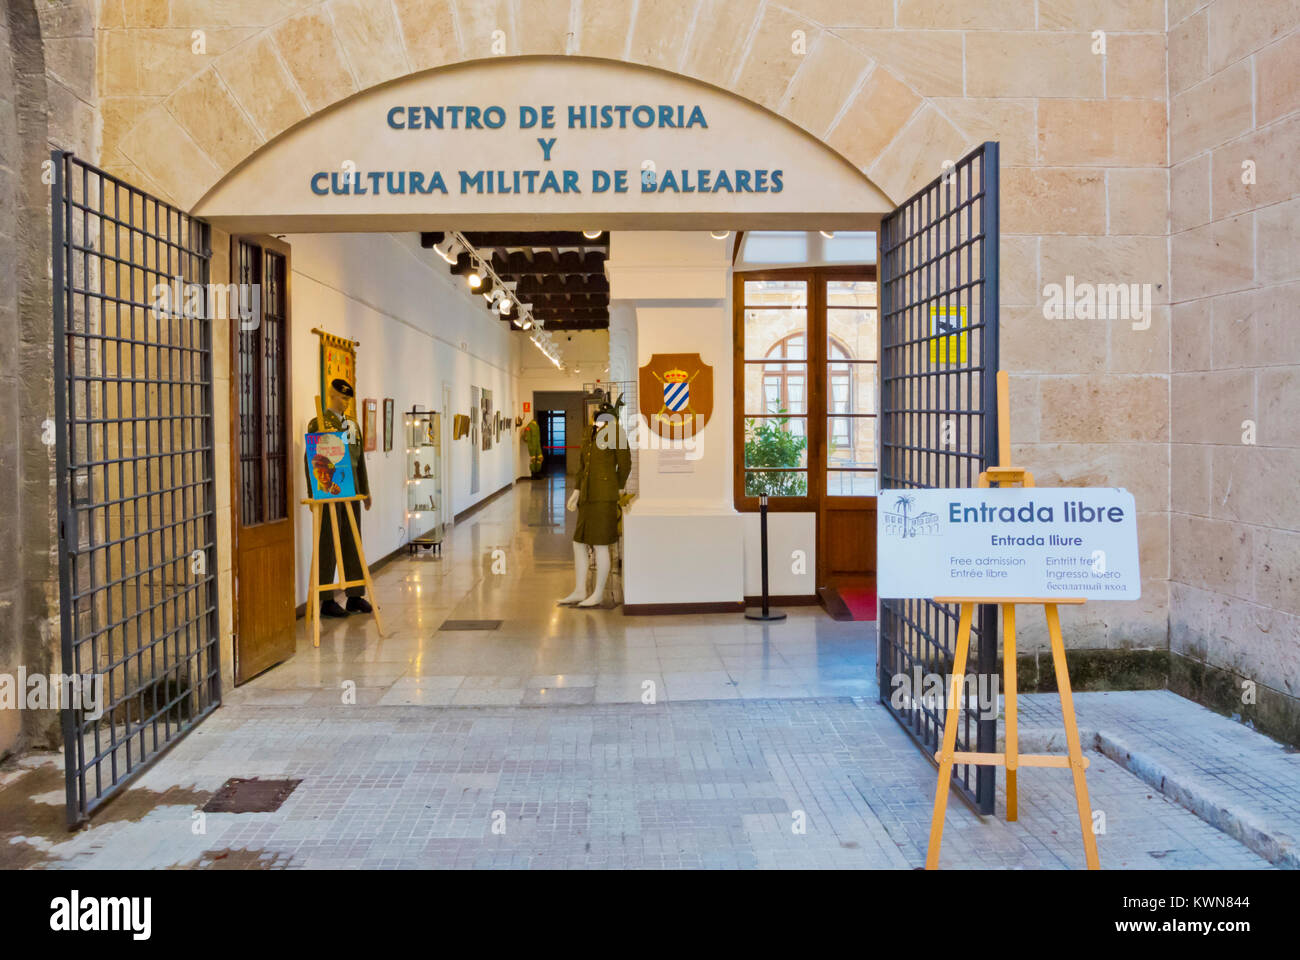 Centro de historia y cultura militar, military culture museum, Palma, Mallorca, Balearic islands, Spain Stock Photo